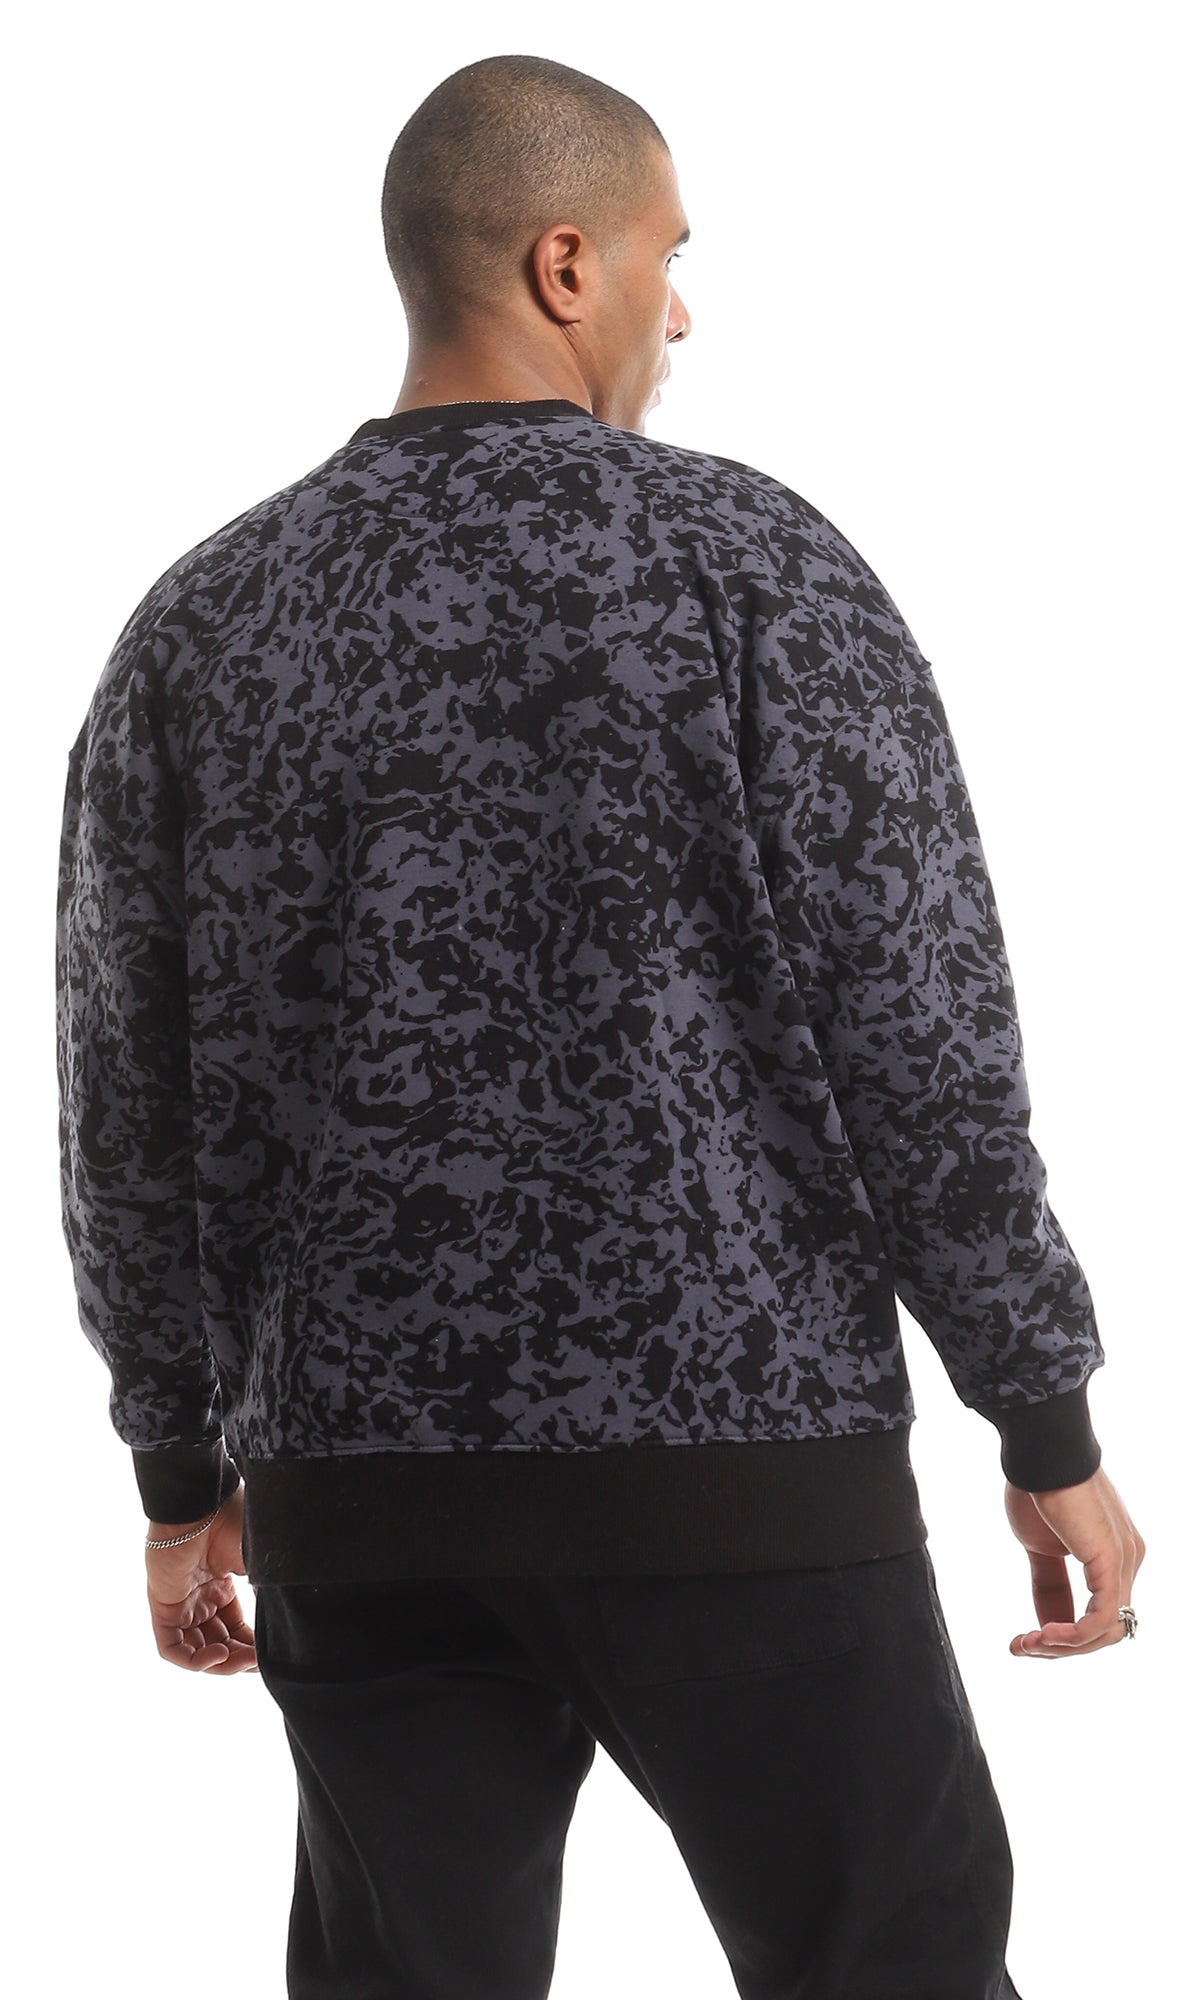 O151462 "Okay" Chest Printed & Patterned Fleece Sweatshirt - Black & Grey